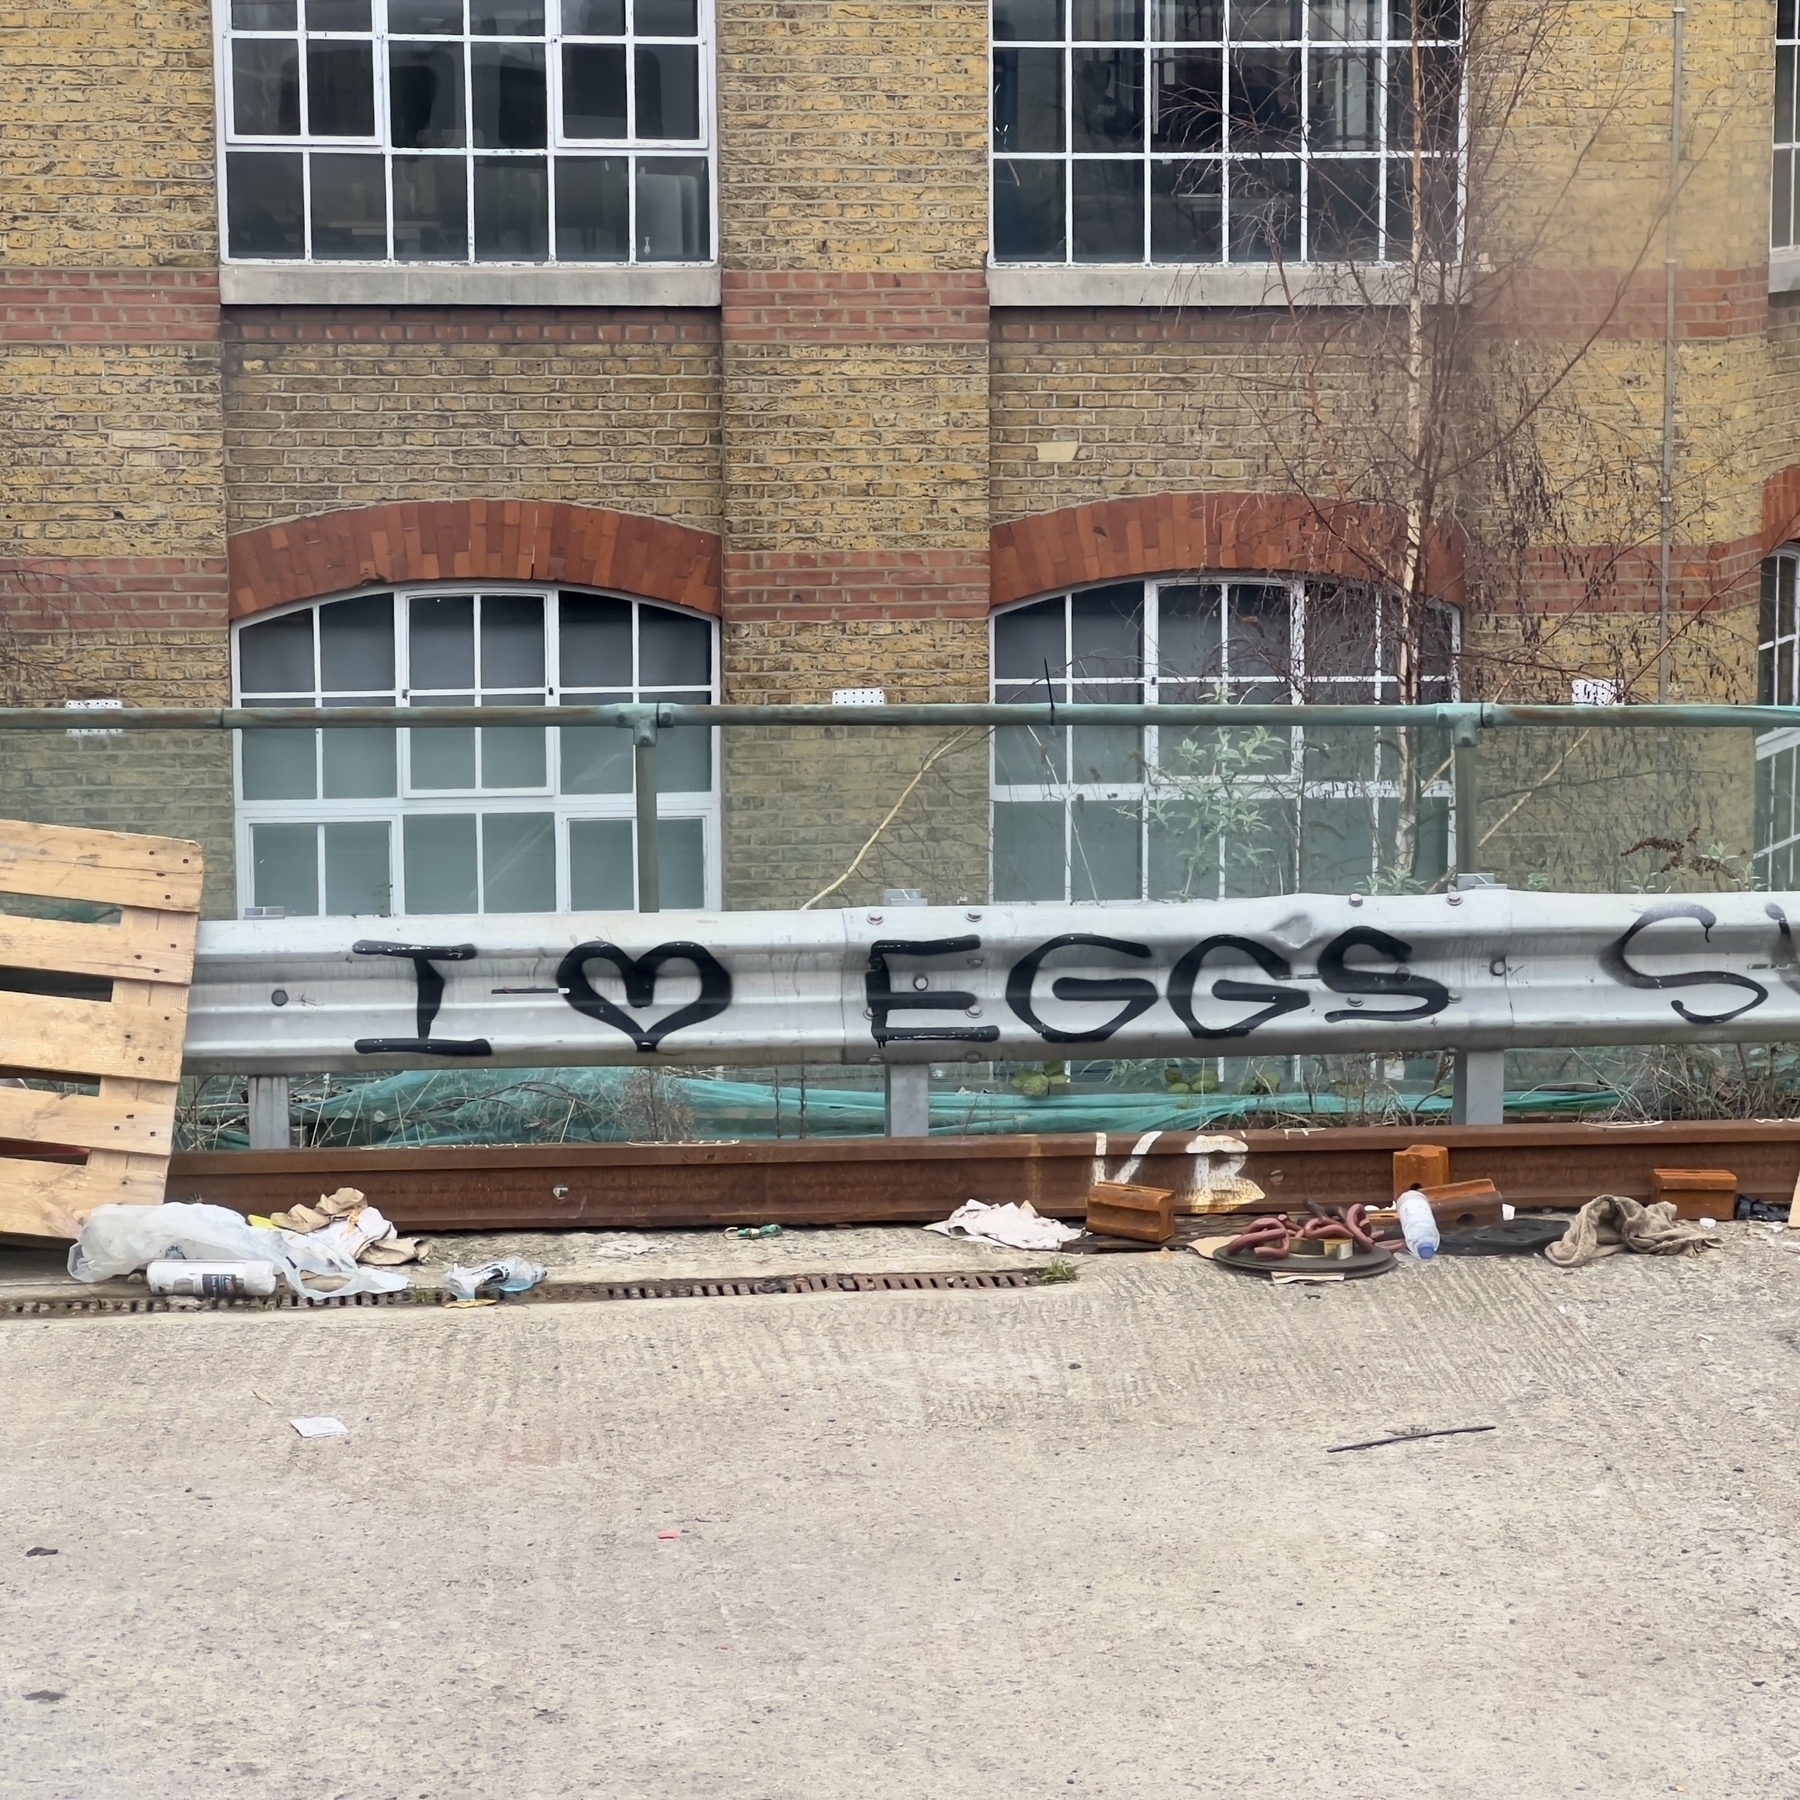 Graffiti in a railway siding reading “I ❤️ eggs”.